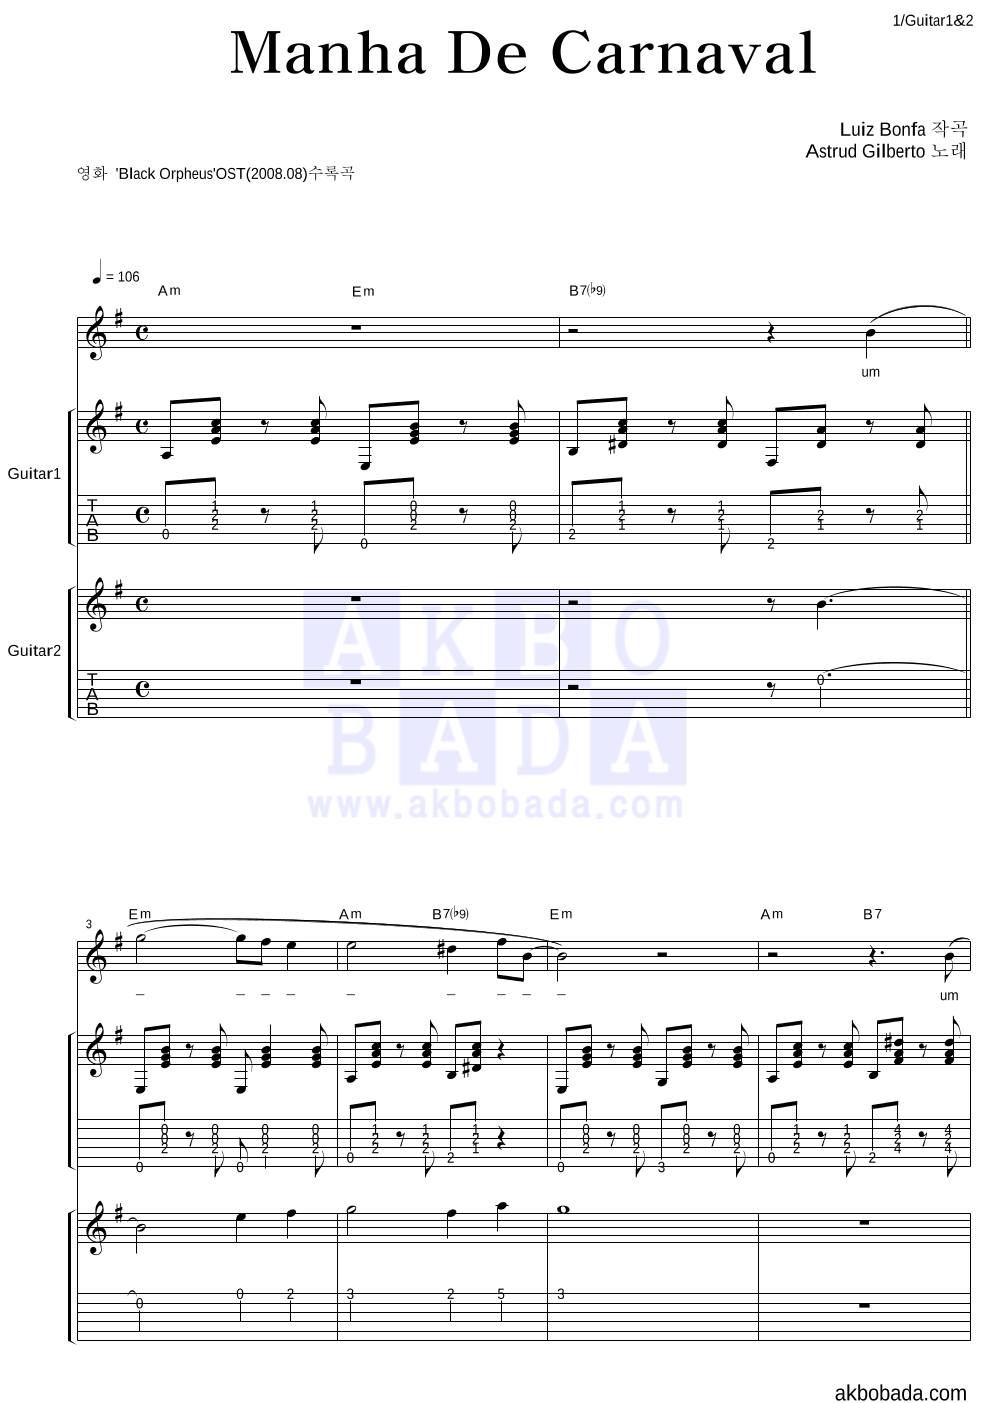 Astrud Gilberto - Manha De Carnaval 기타1,2 악보 